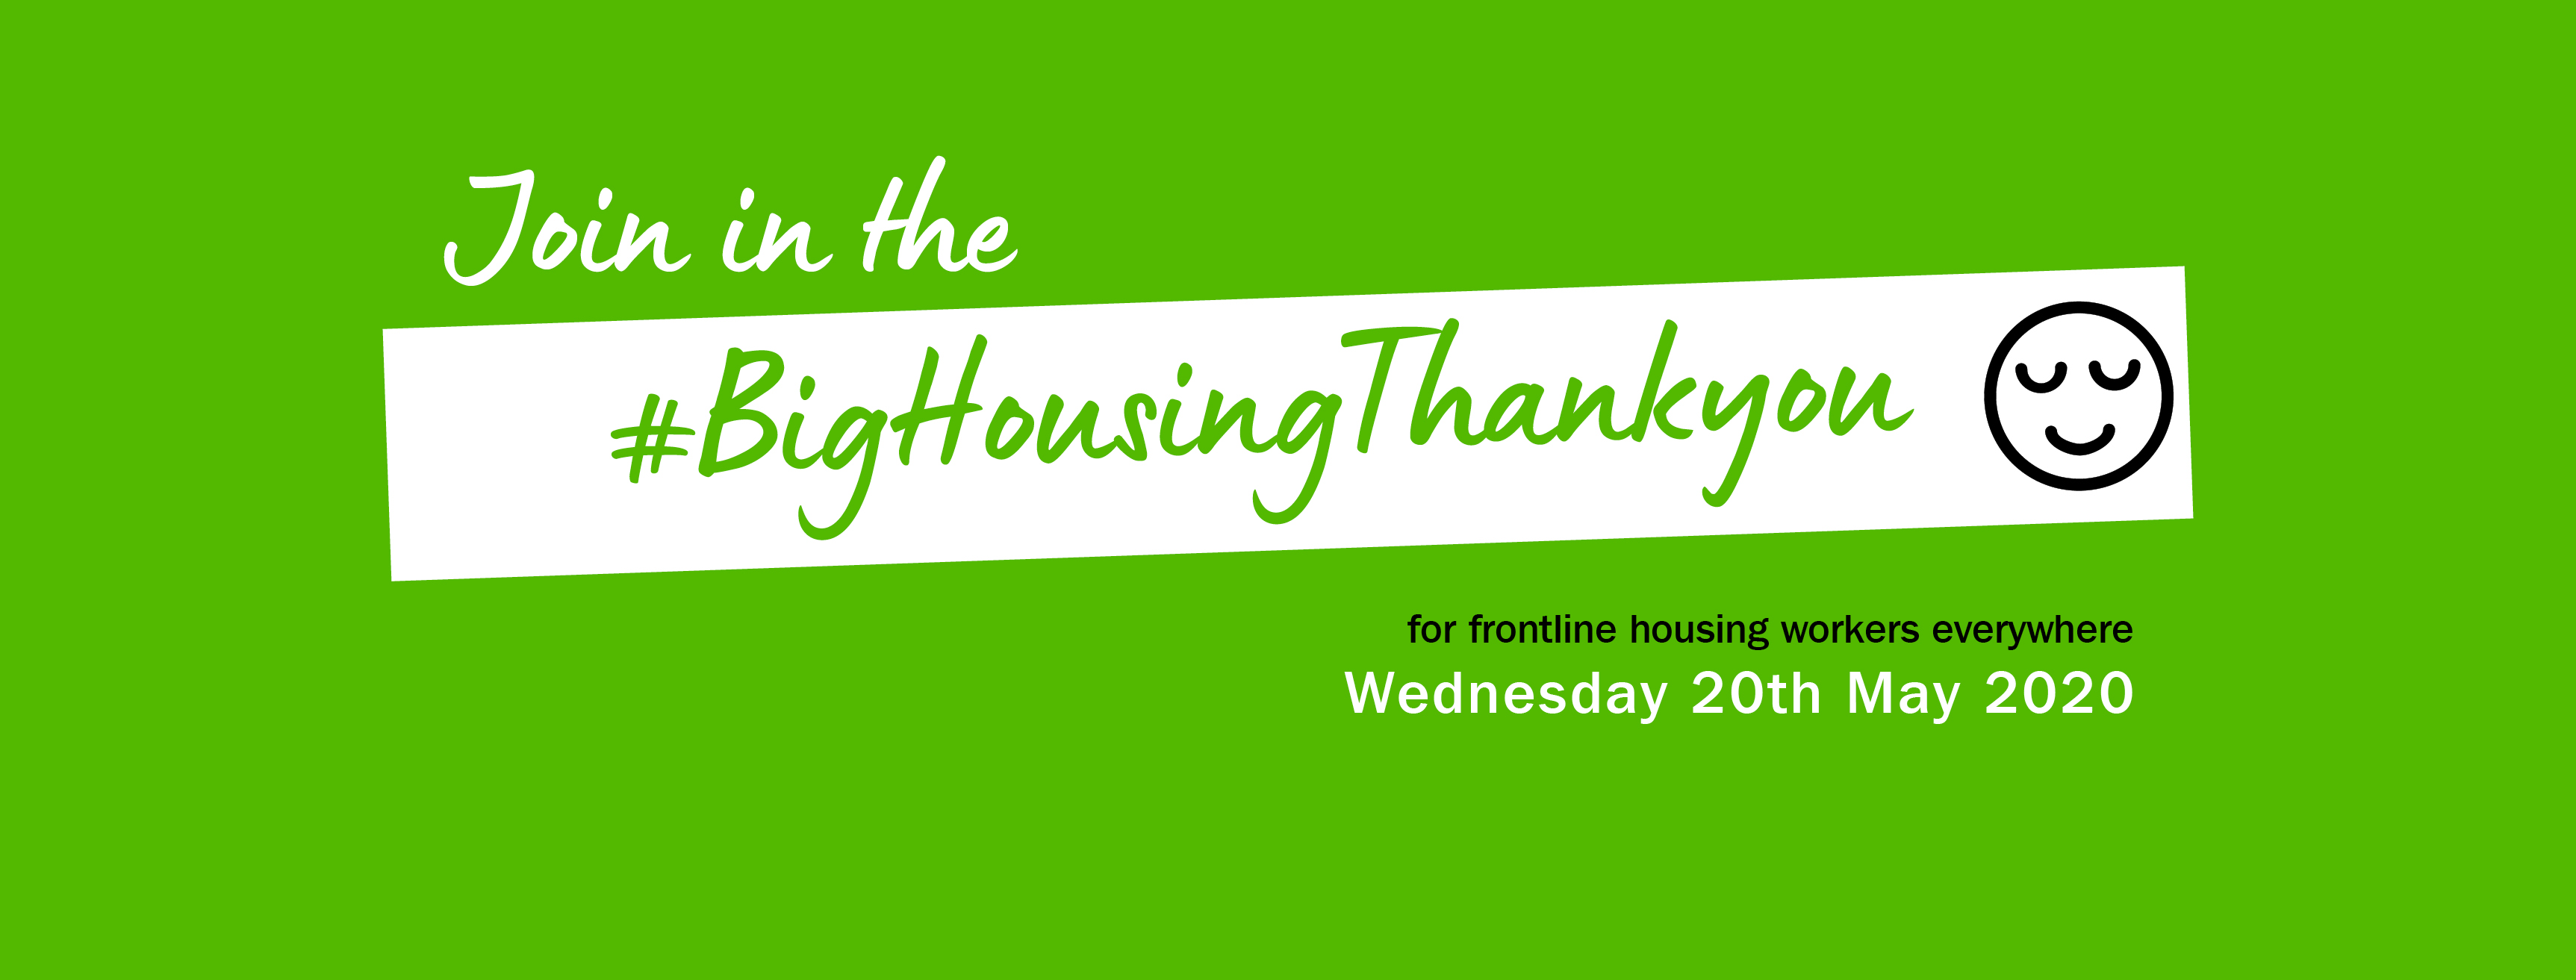 Big housing thank you Facebook banner - green